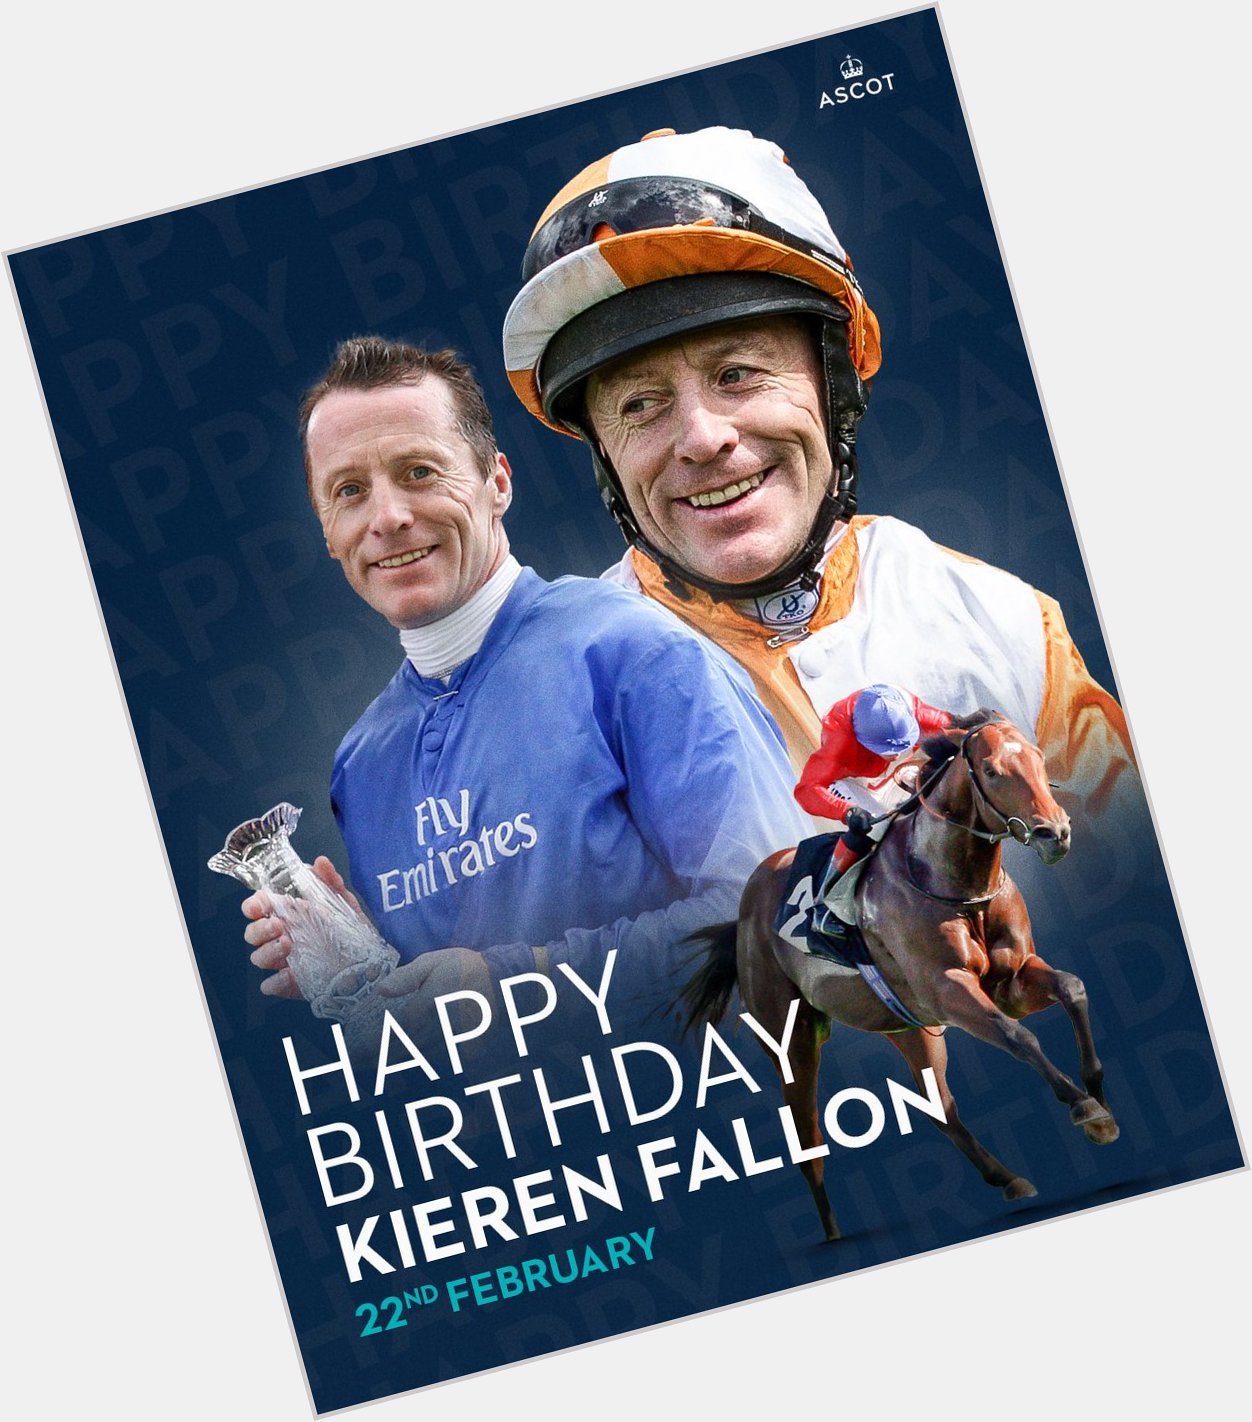 Happy Birthday to Kieren Fallon!

Send your birthday messages below! 